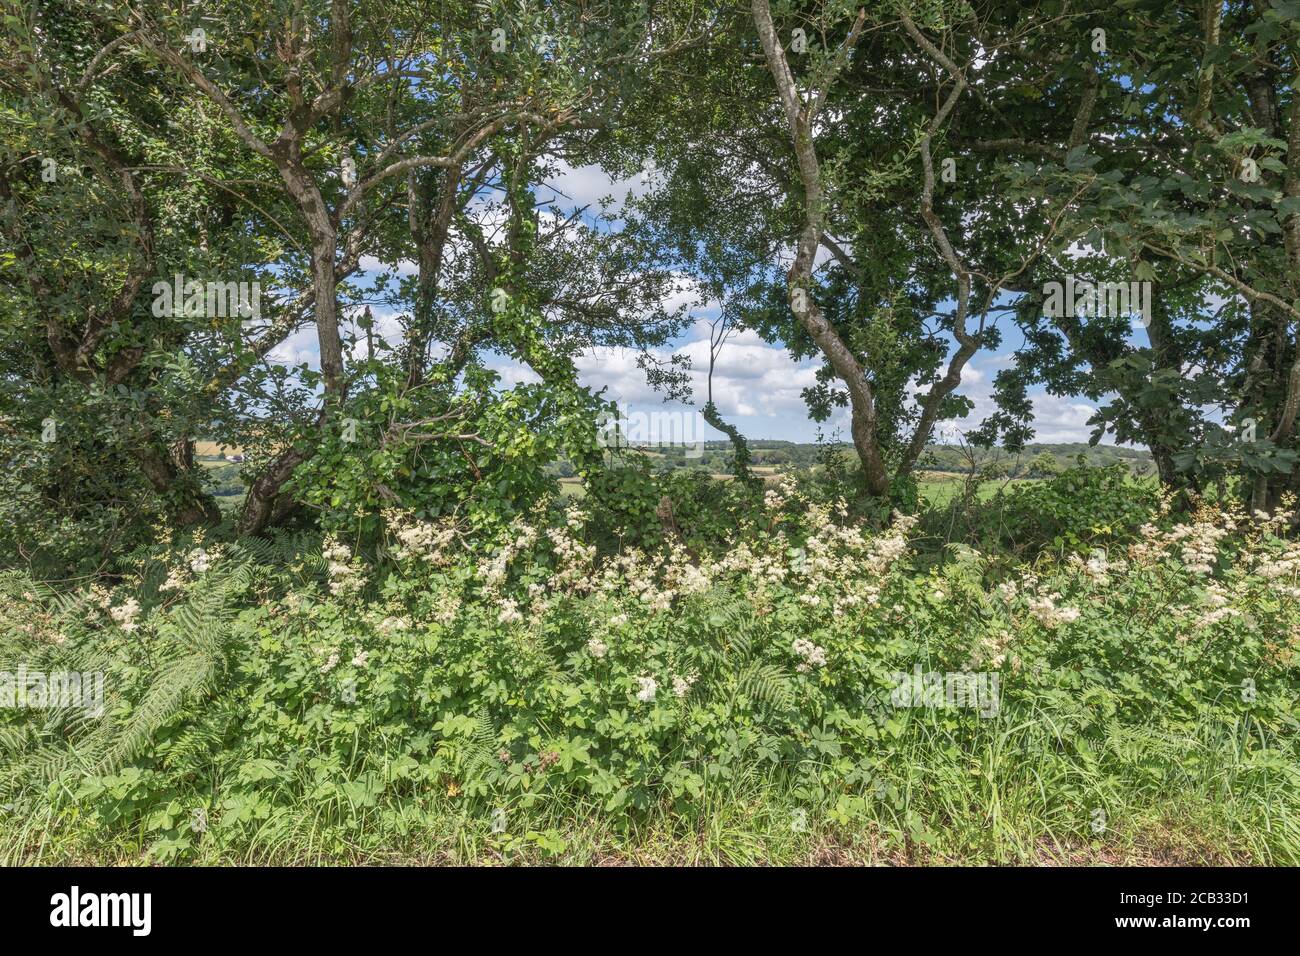 Meadowsweet / Filipendula ulmaria flowers in Summer sunshine. Medicinal plant used in herbal medicine & herbal remedies for its analgesic properties. Stock Photo